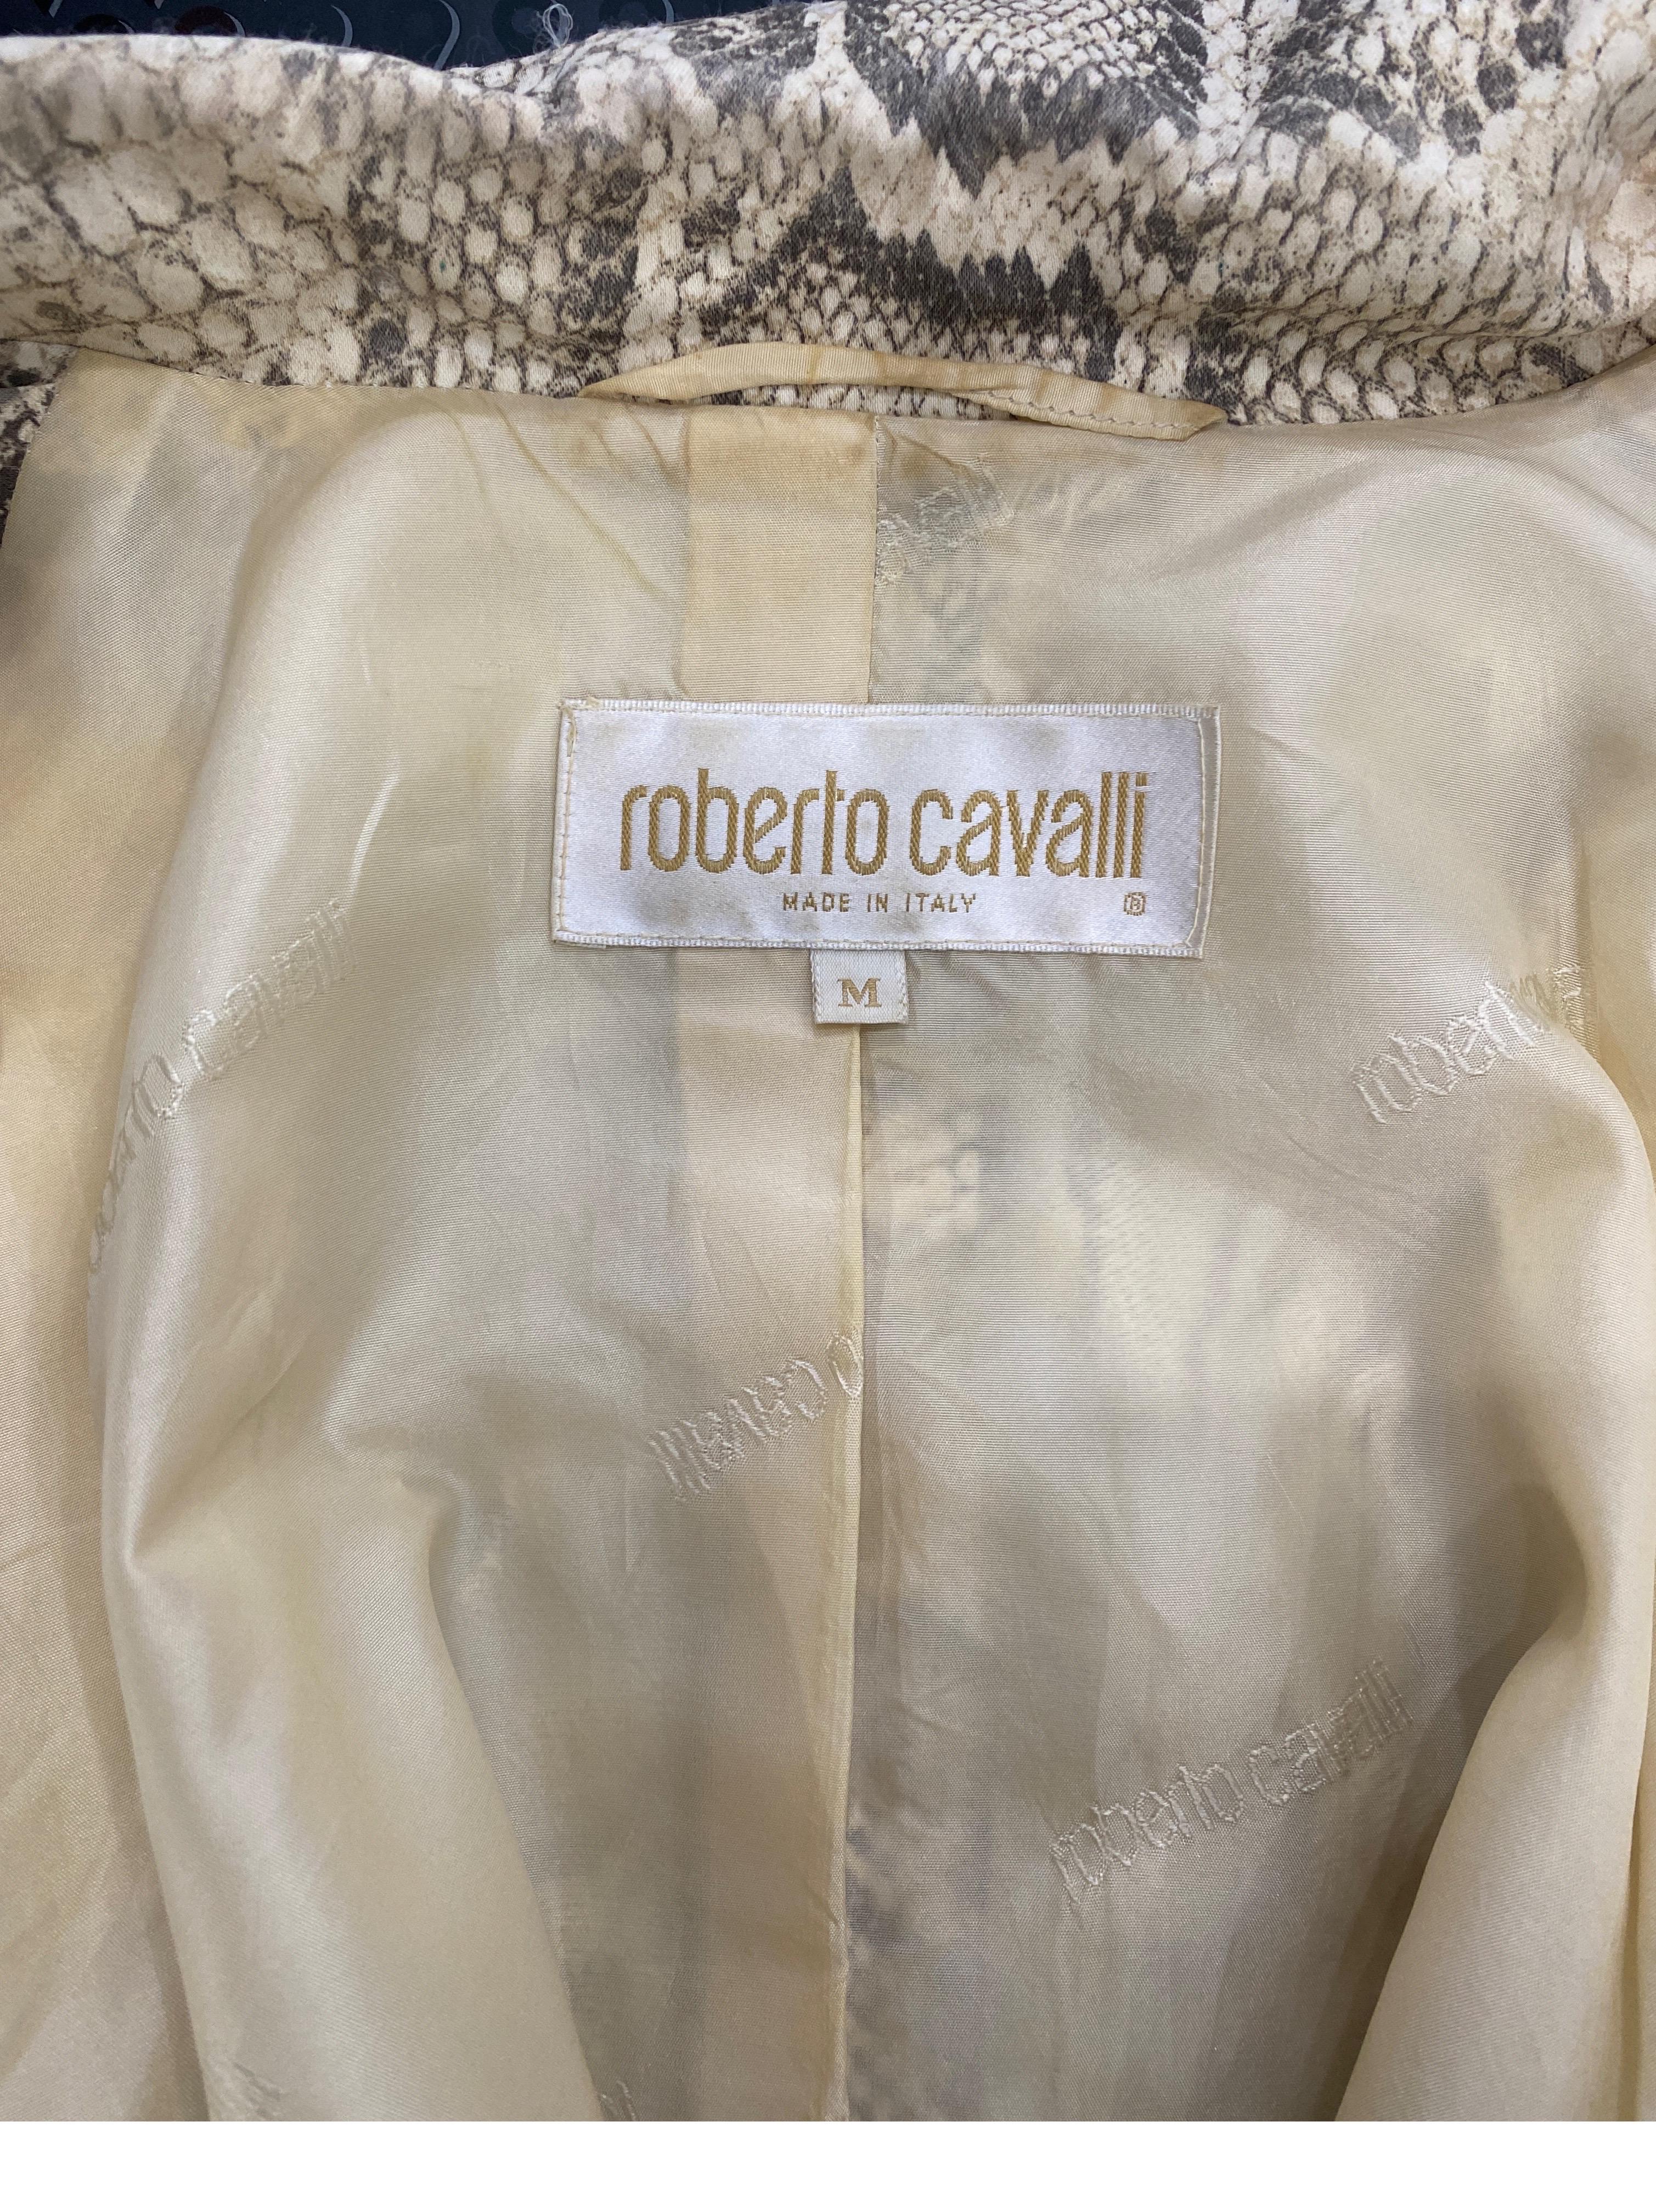 Roberto Cavalli Late 1990's Python Print Jacket - Size Medium 3